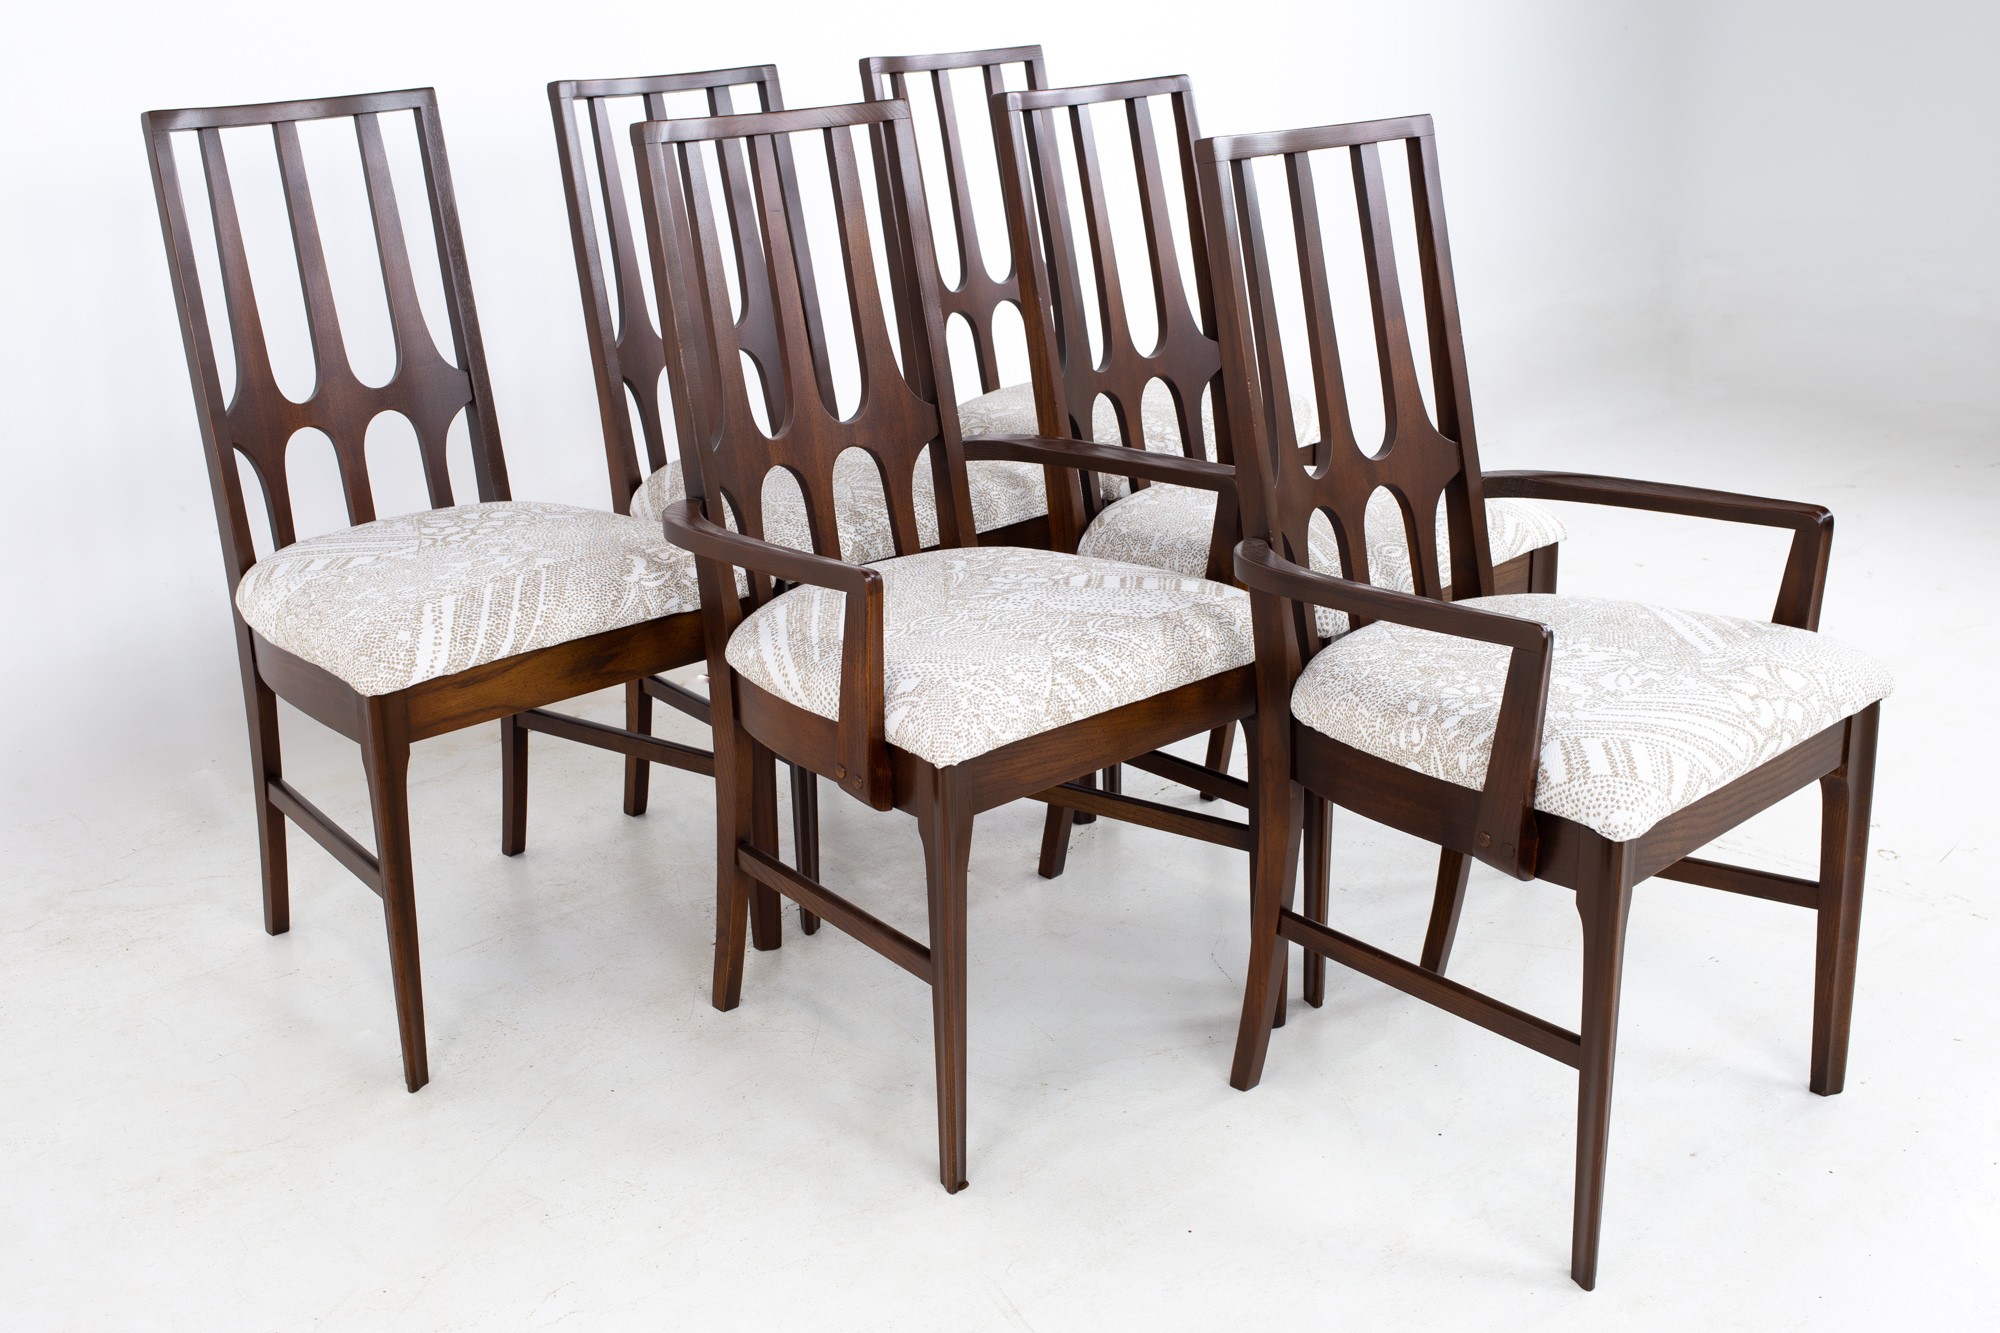 Broyhill Brasilia Mid Century Dining Chairs - Set of 6